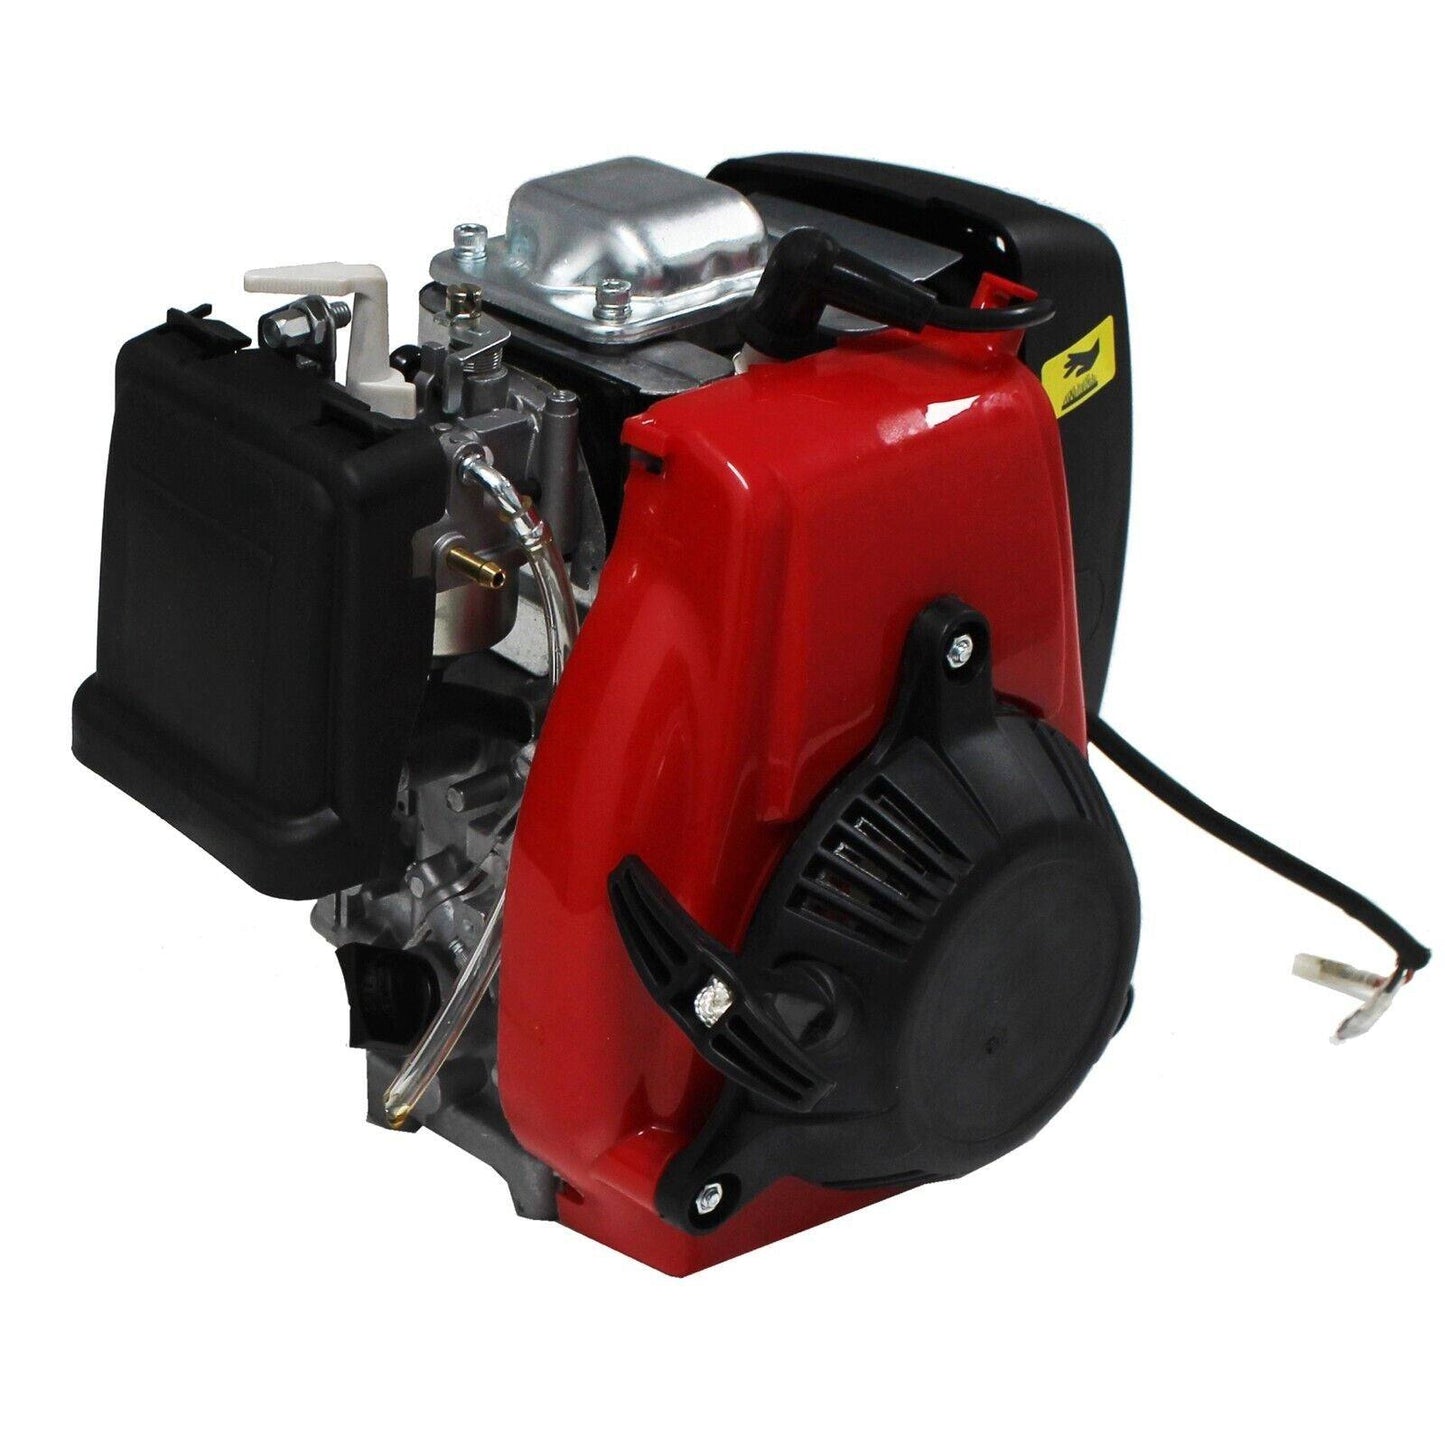 4 Stroke Pull Start Engine 49cc For Mini Dirt Bike Quad ATV Pocket